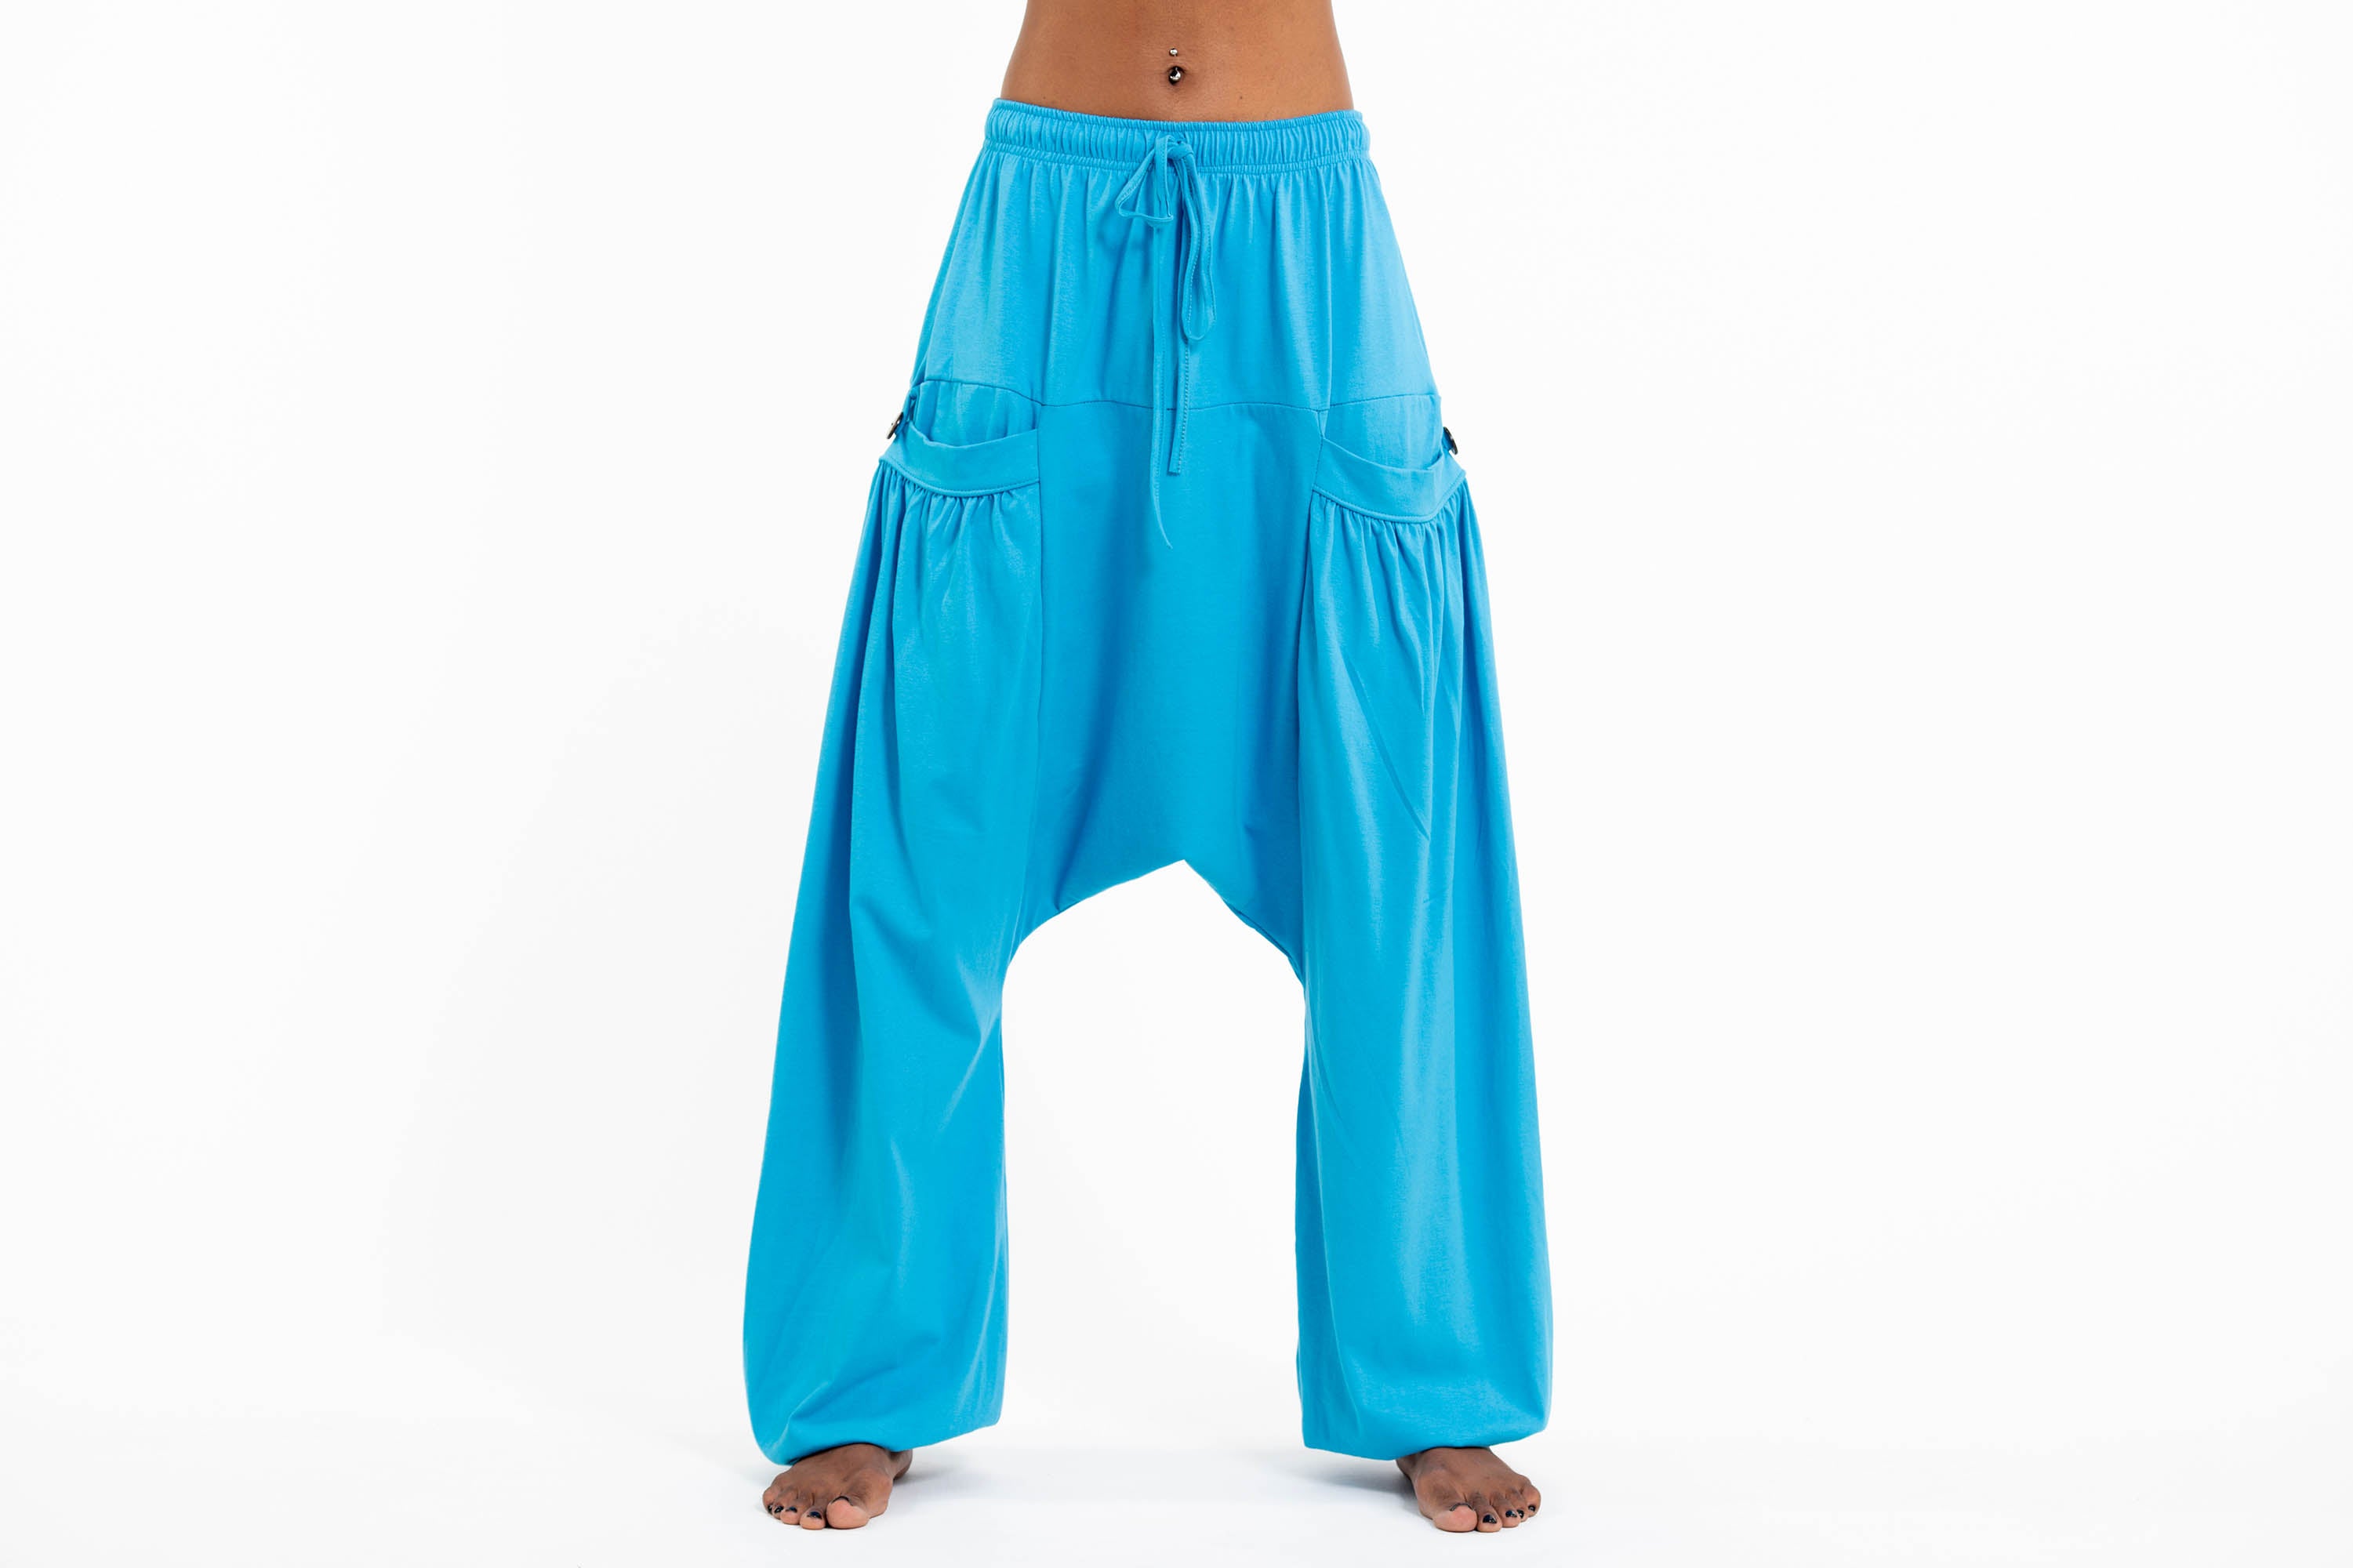 Cotton Women Harem Pants in Solid Light Blue